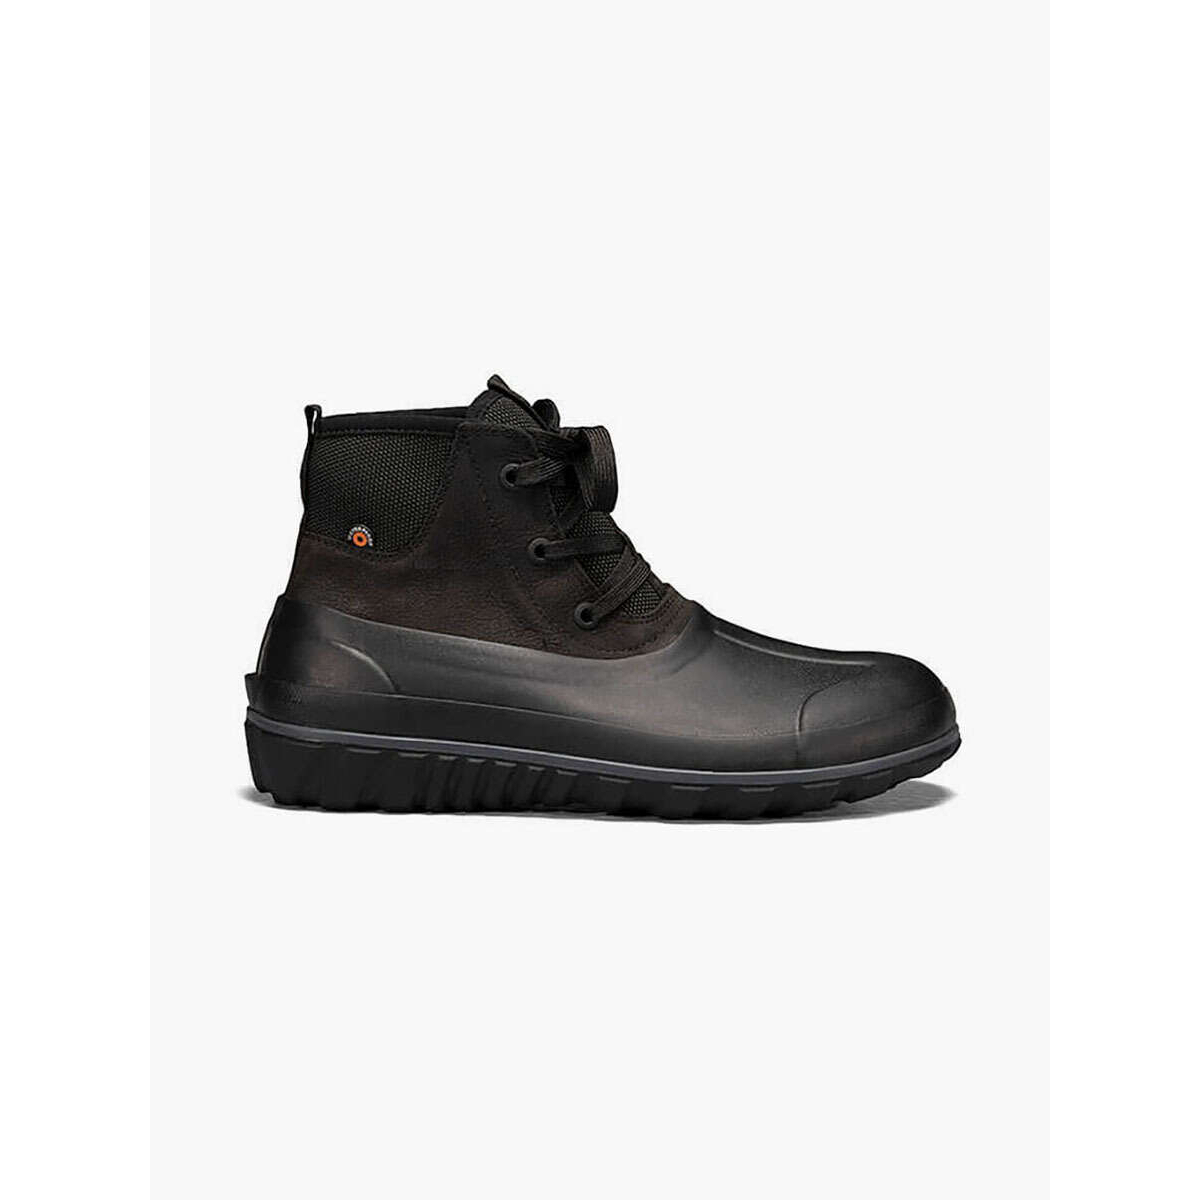 BOGS Men's Casual Lace Waterproof Leather Snow Boots Black - 72620-001 001 Black - 001 Black, 12-M